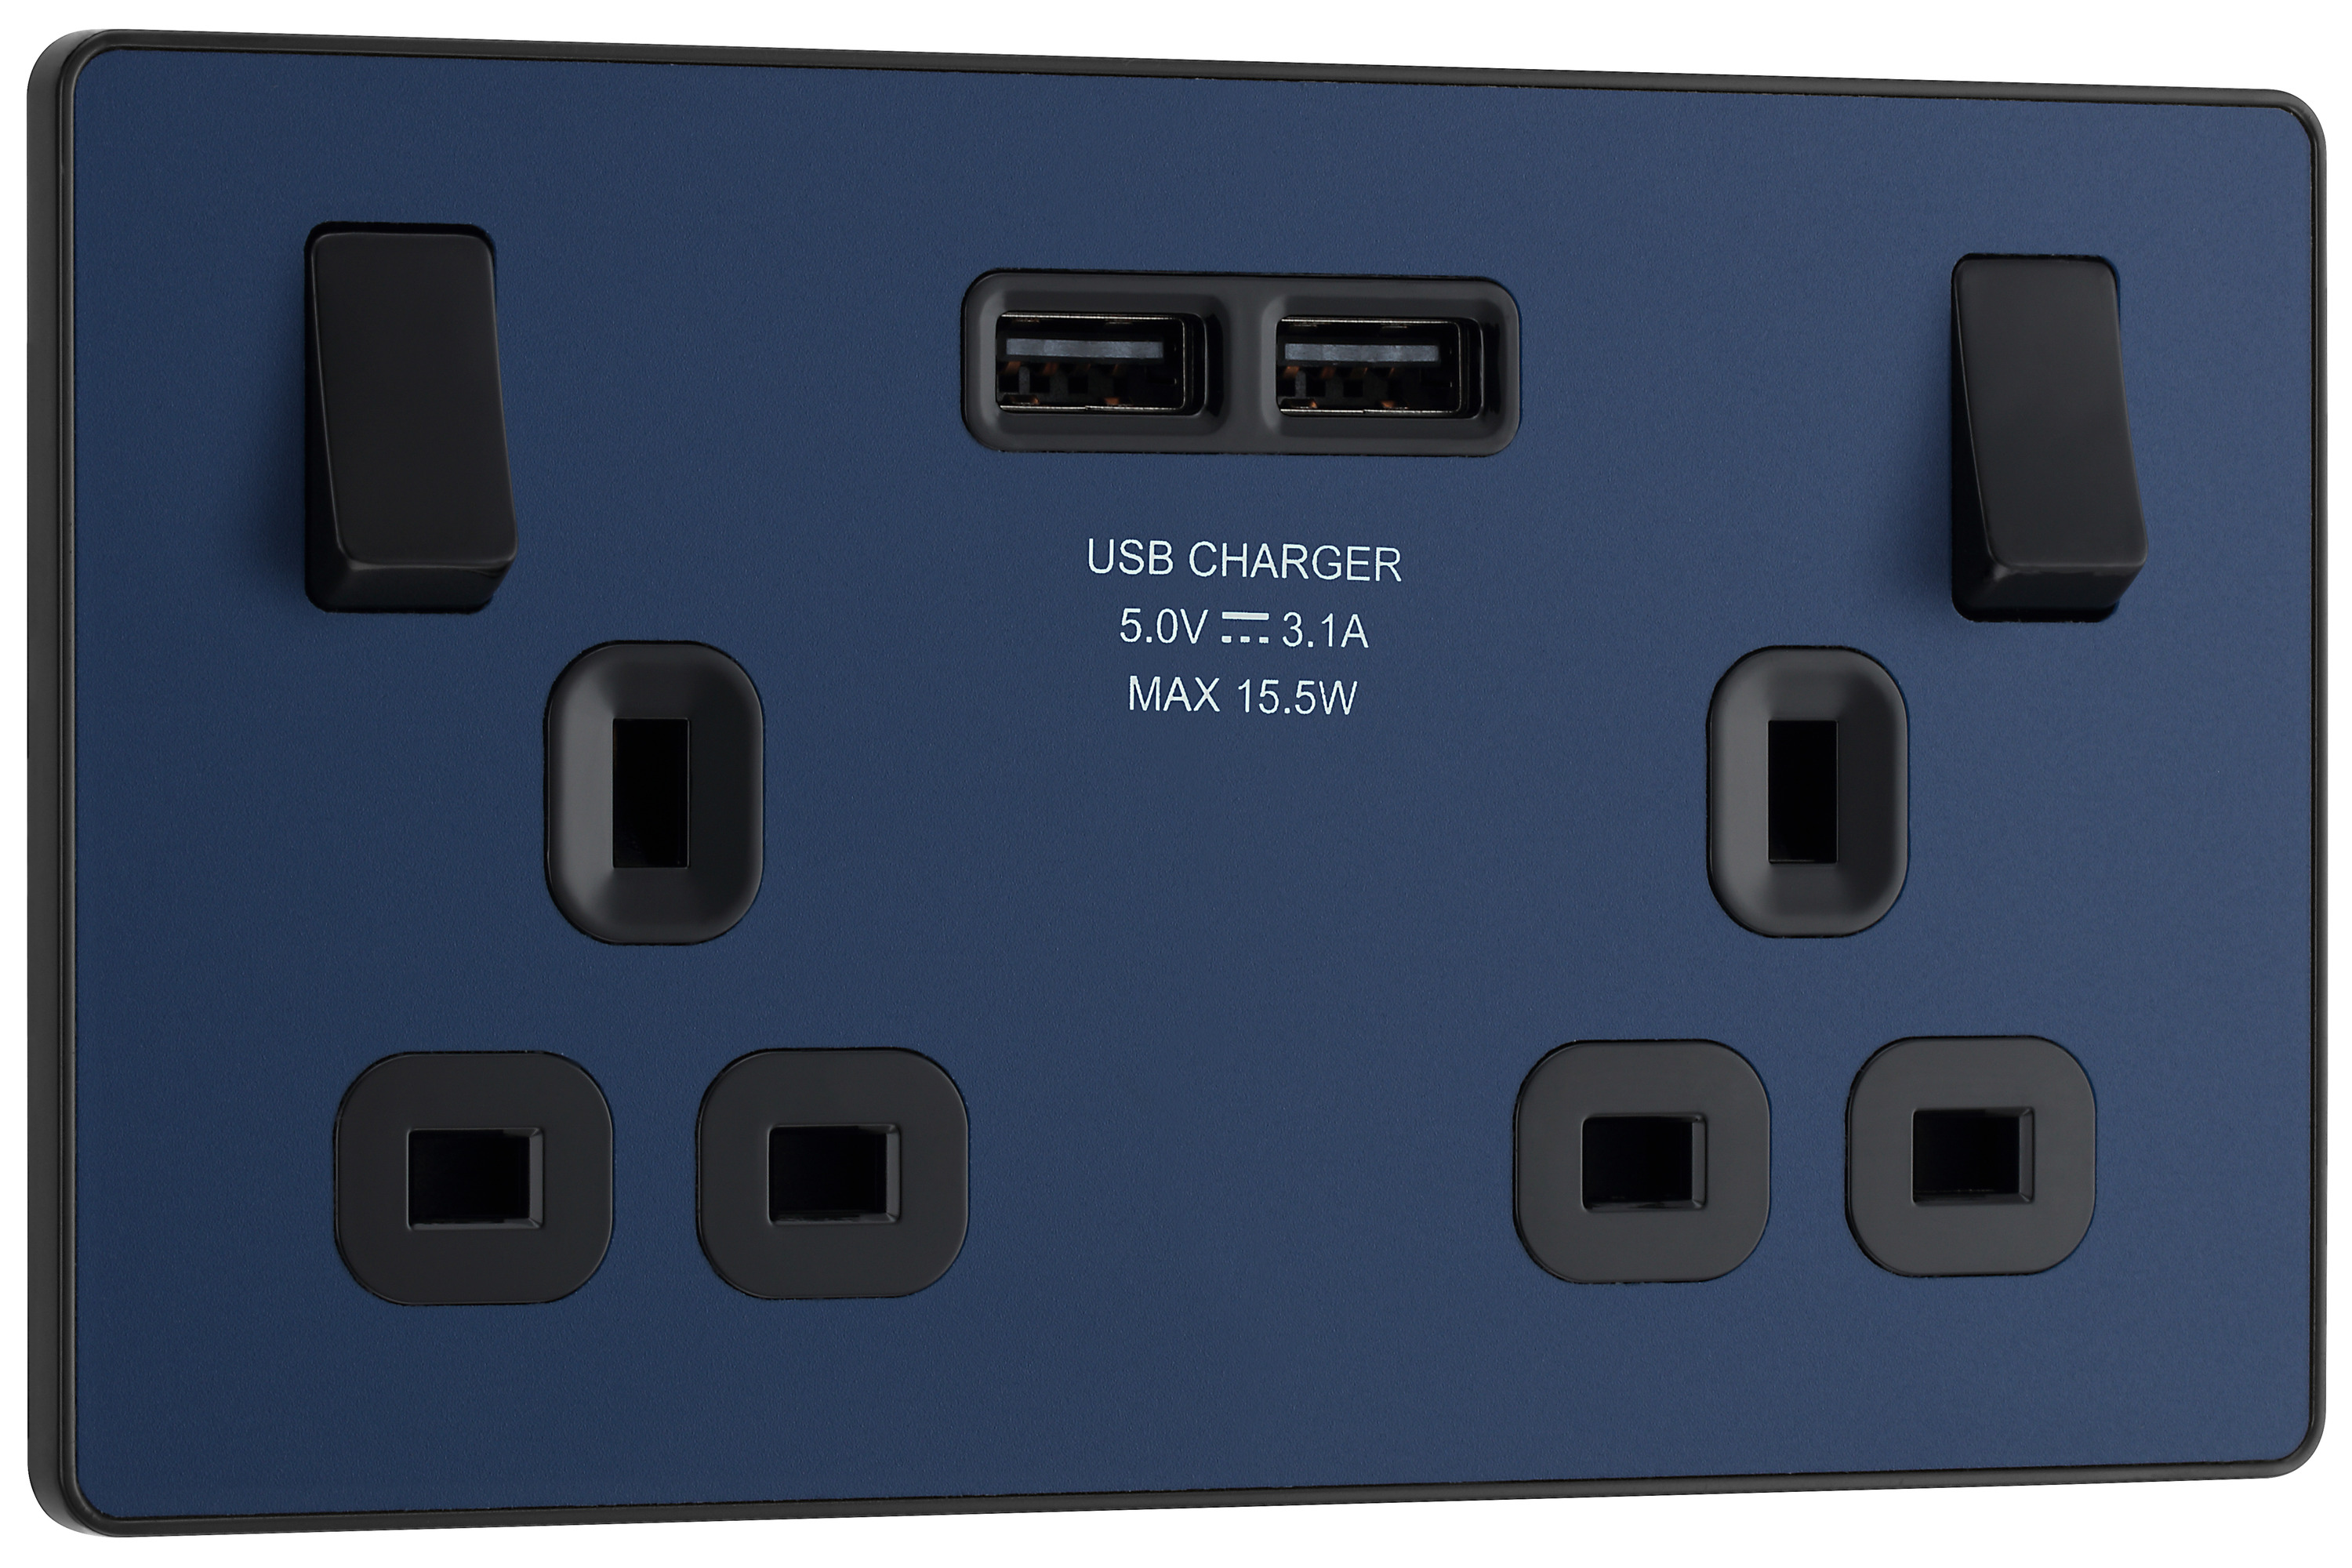 BG Evolve Matt Blue 13A Double Switched Power Socket & 2 x USB (3.1A)